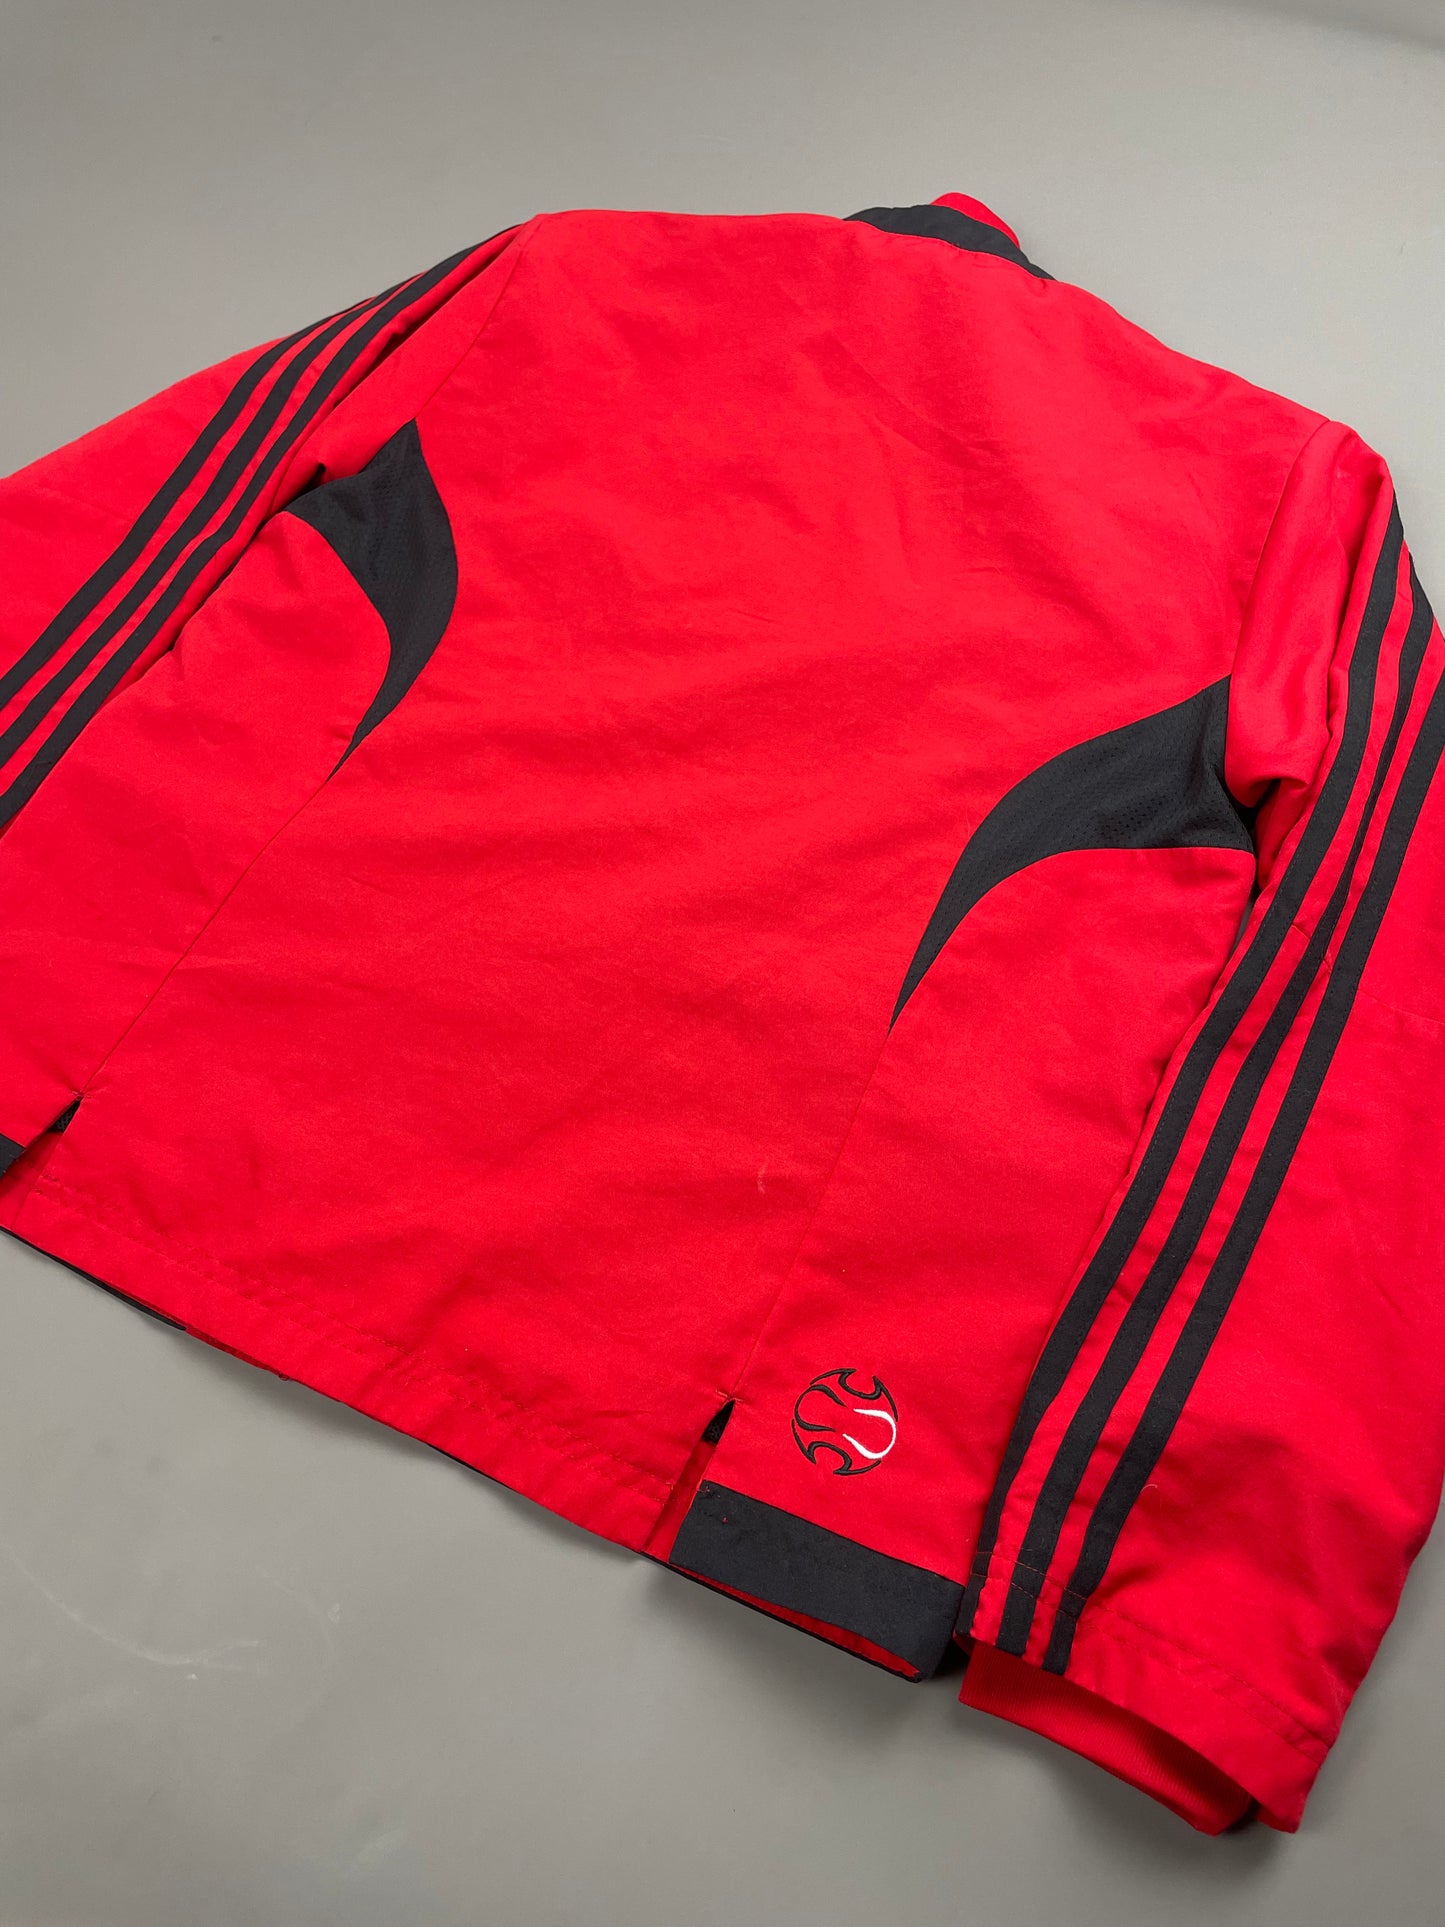 Adidas x AcMiland Trackjacket (XS)